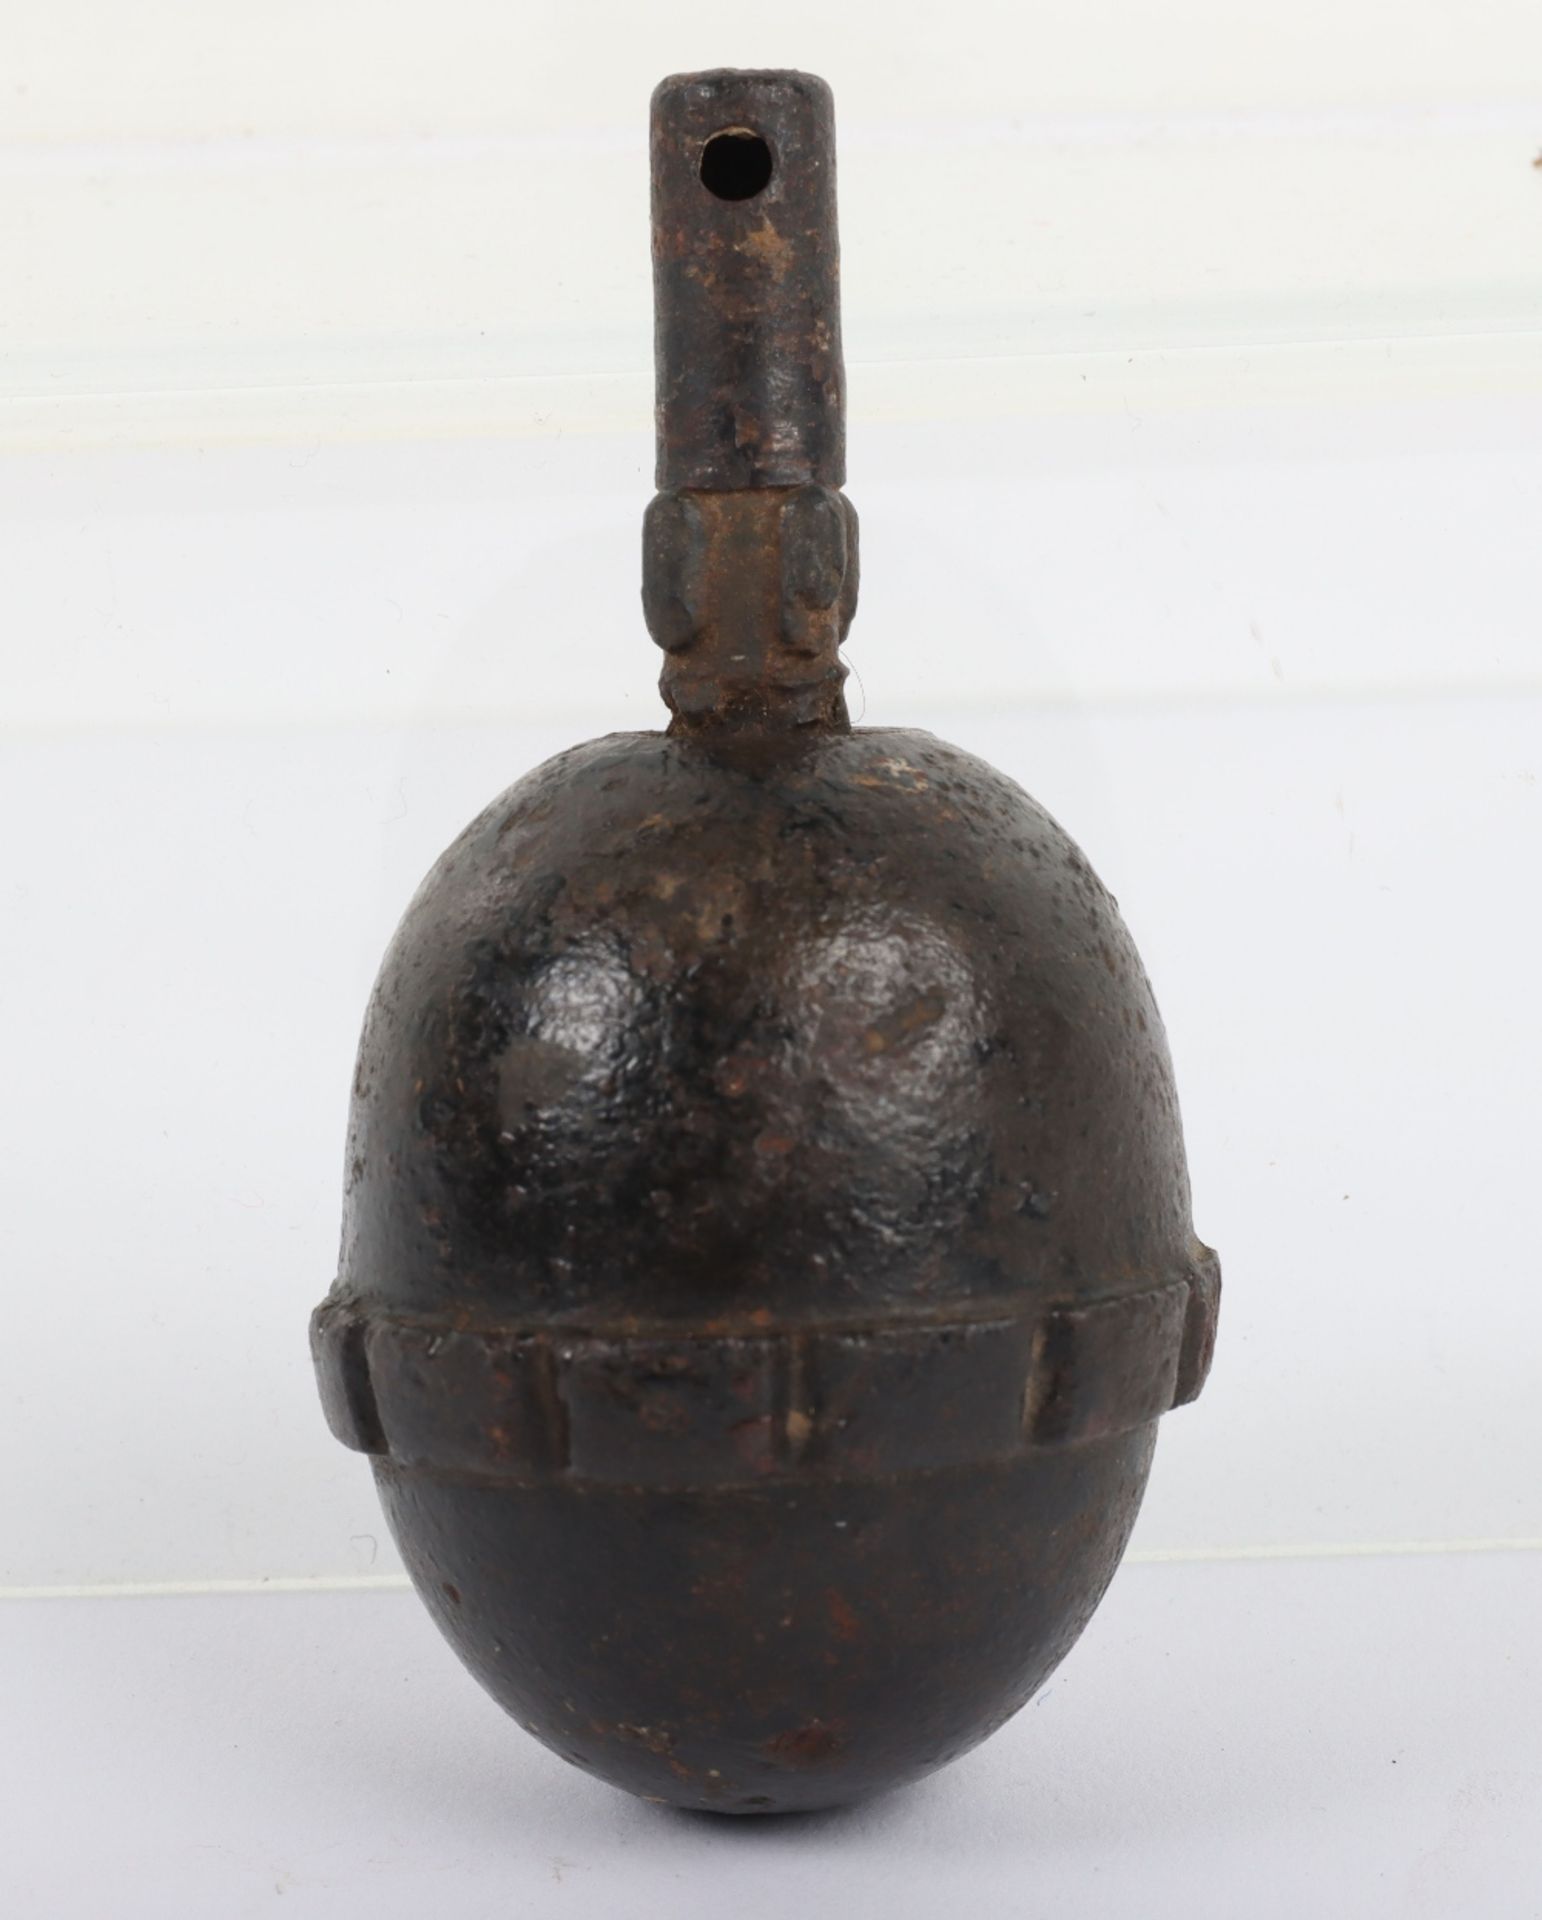 Inert WW1 German Egg Grenade - Image 2 of 4